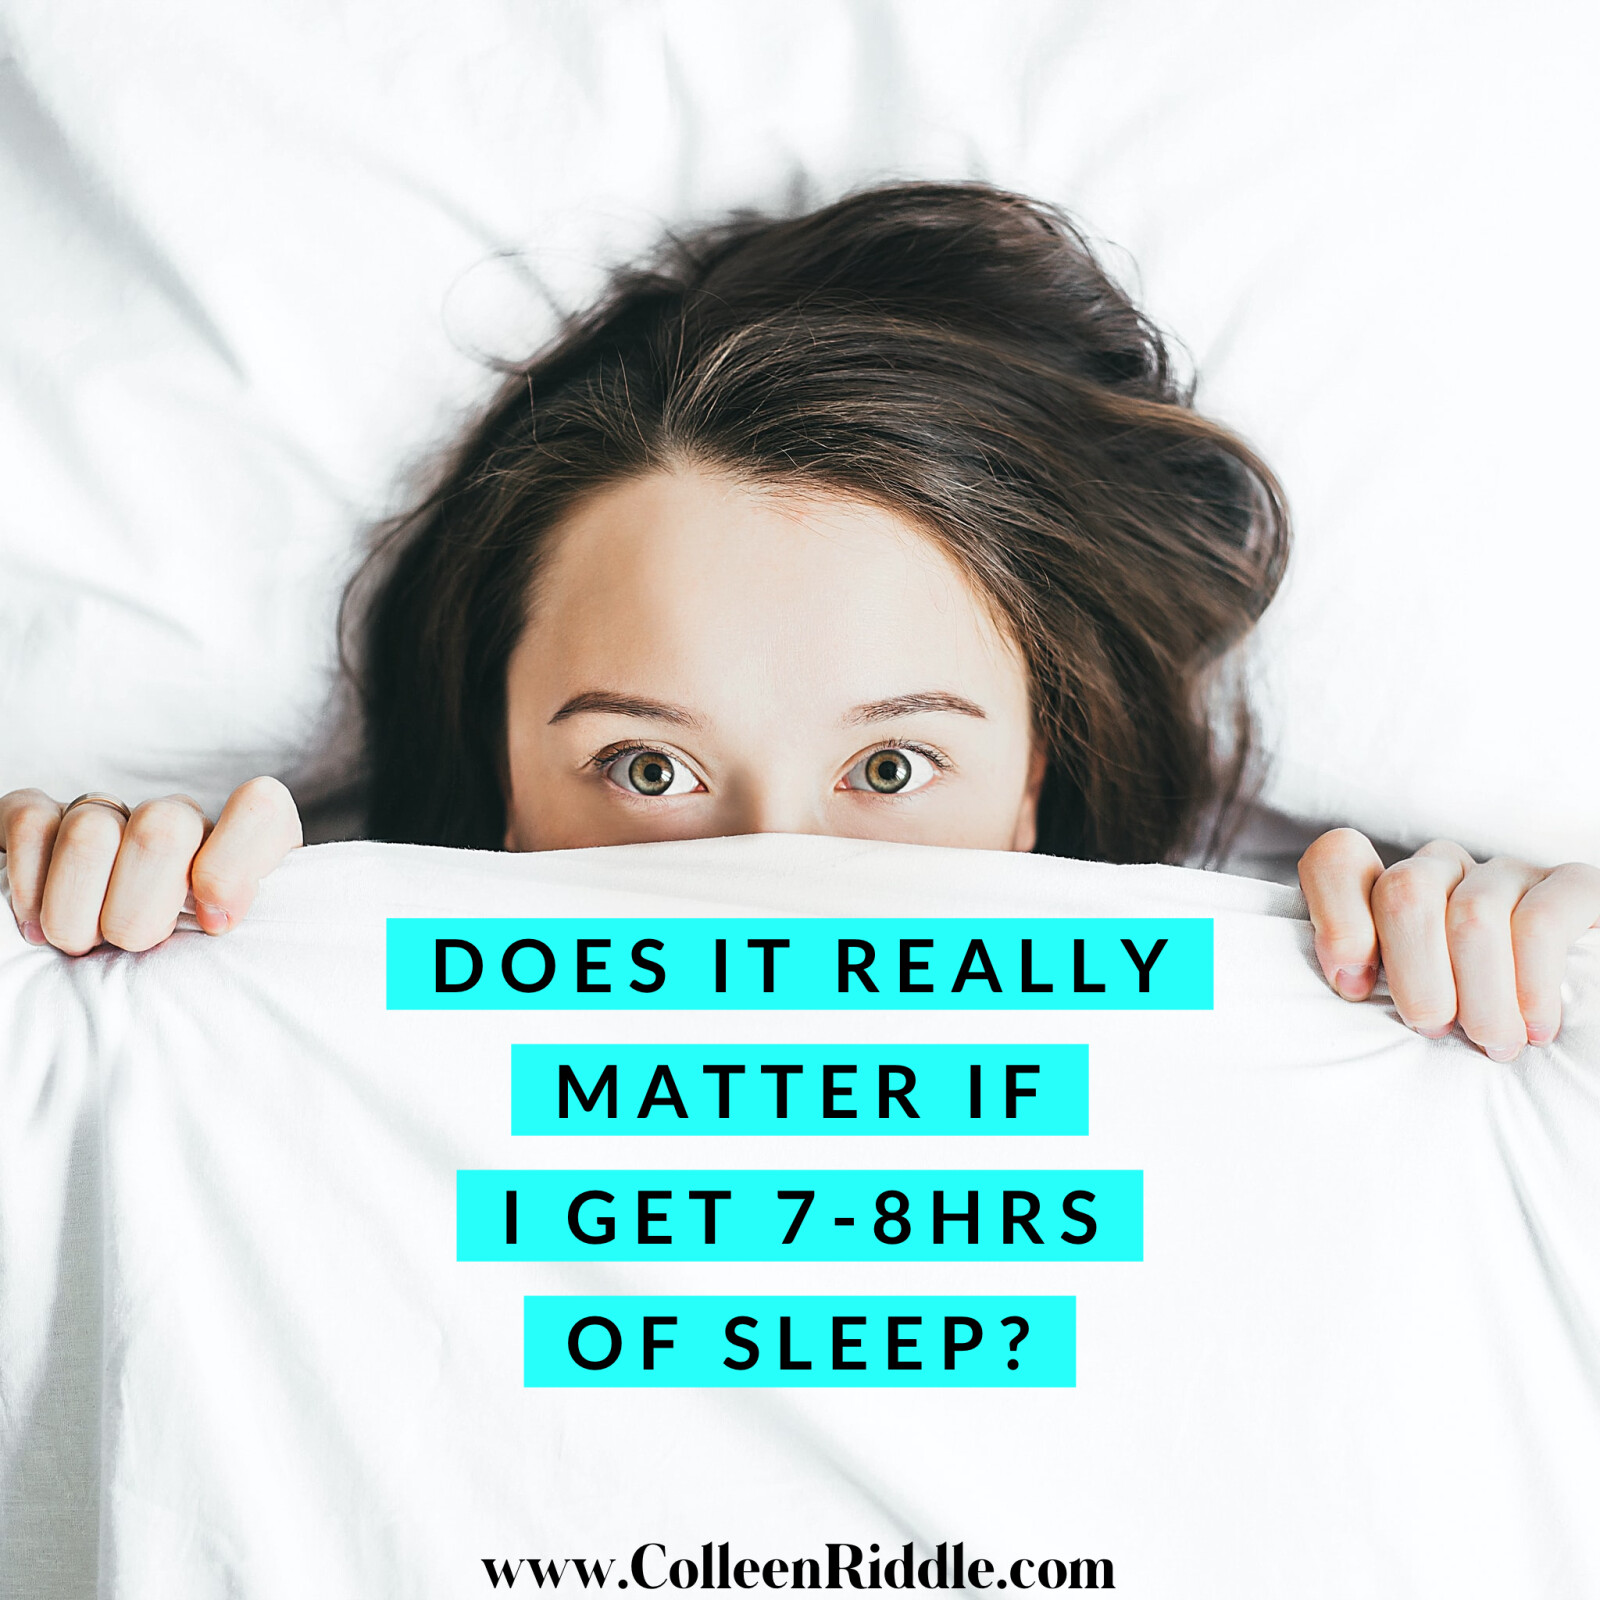 How important is sleep?